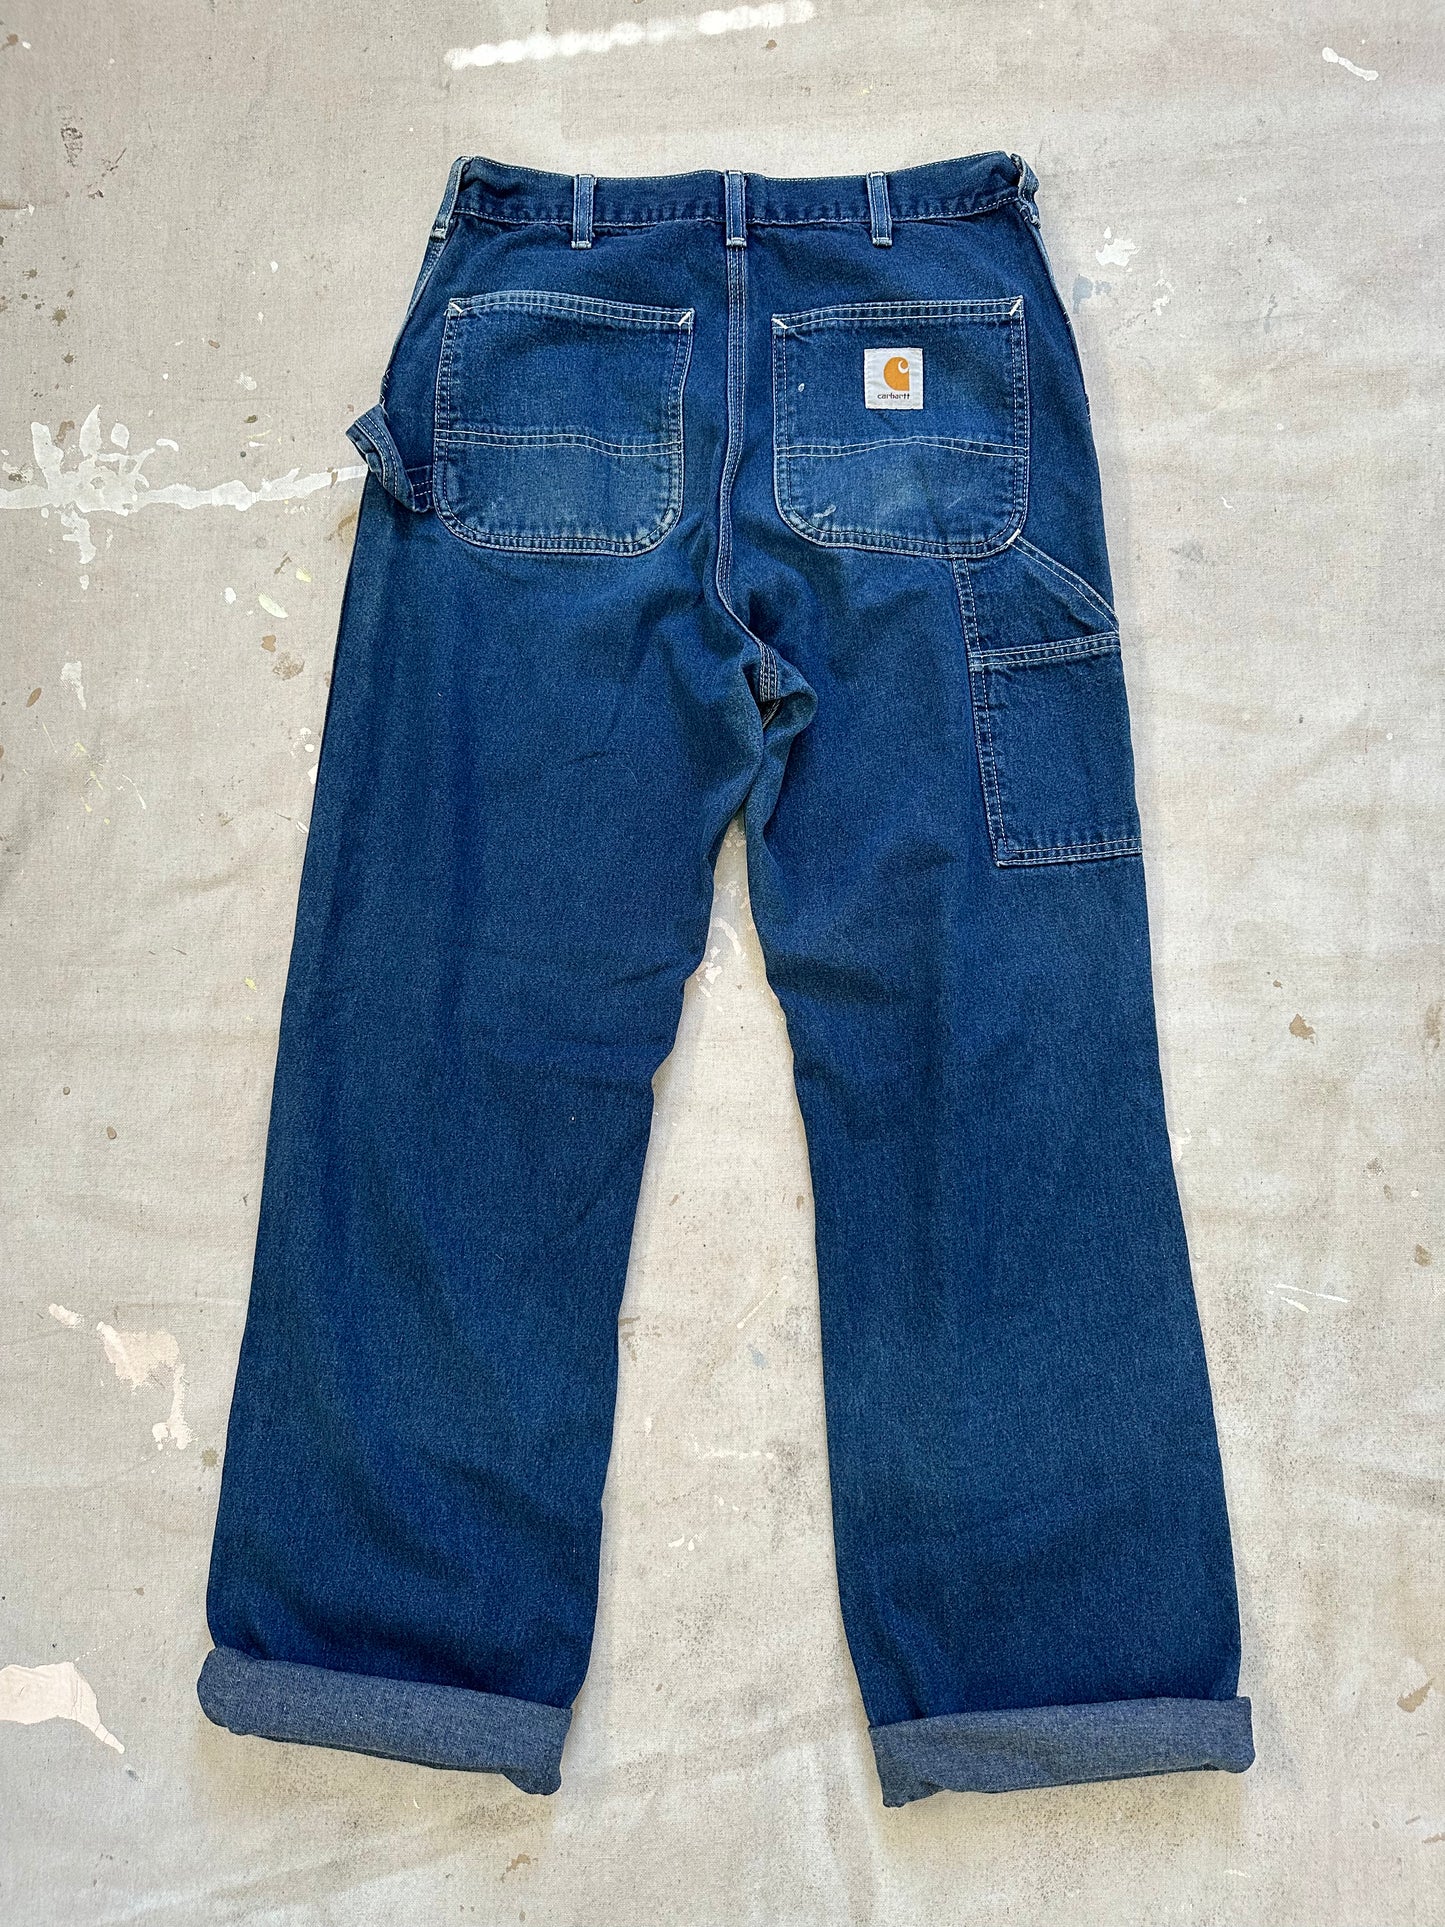 70s/80s Carhartt Carpenter Jeans